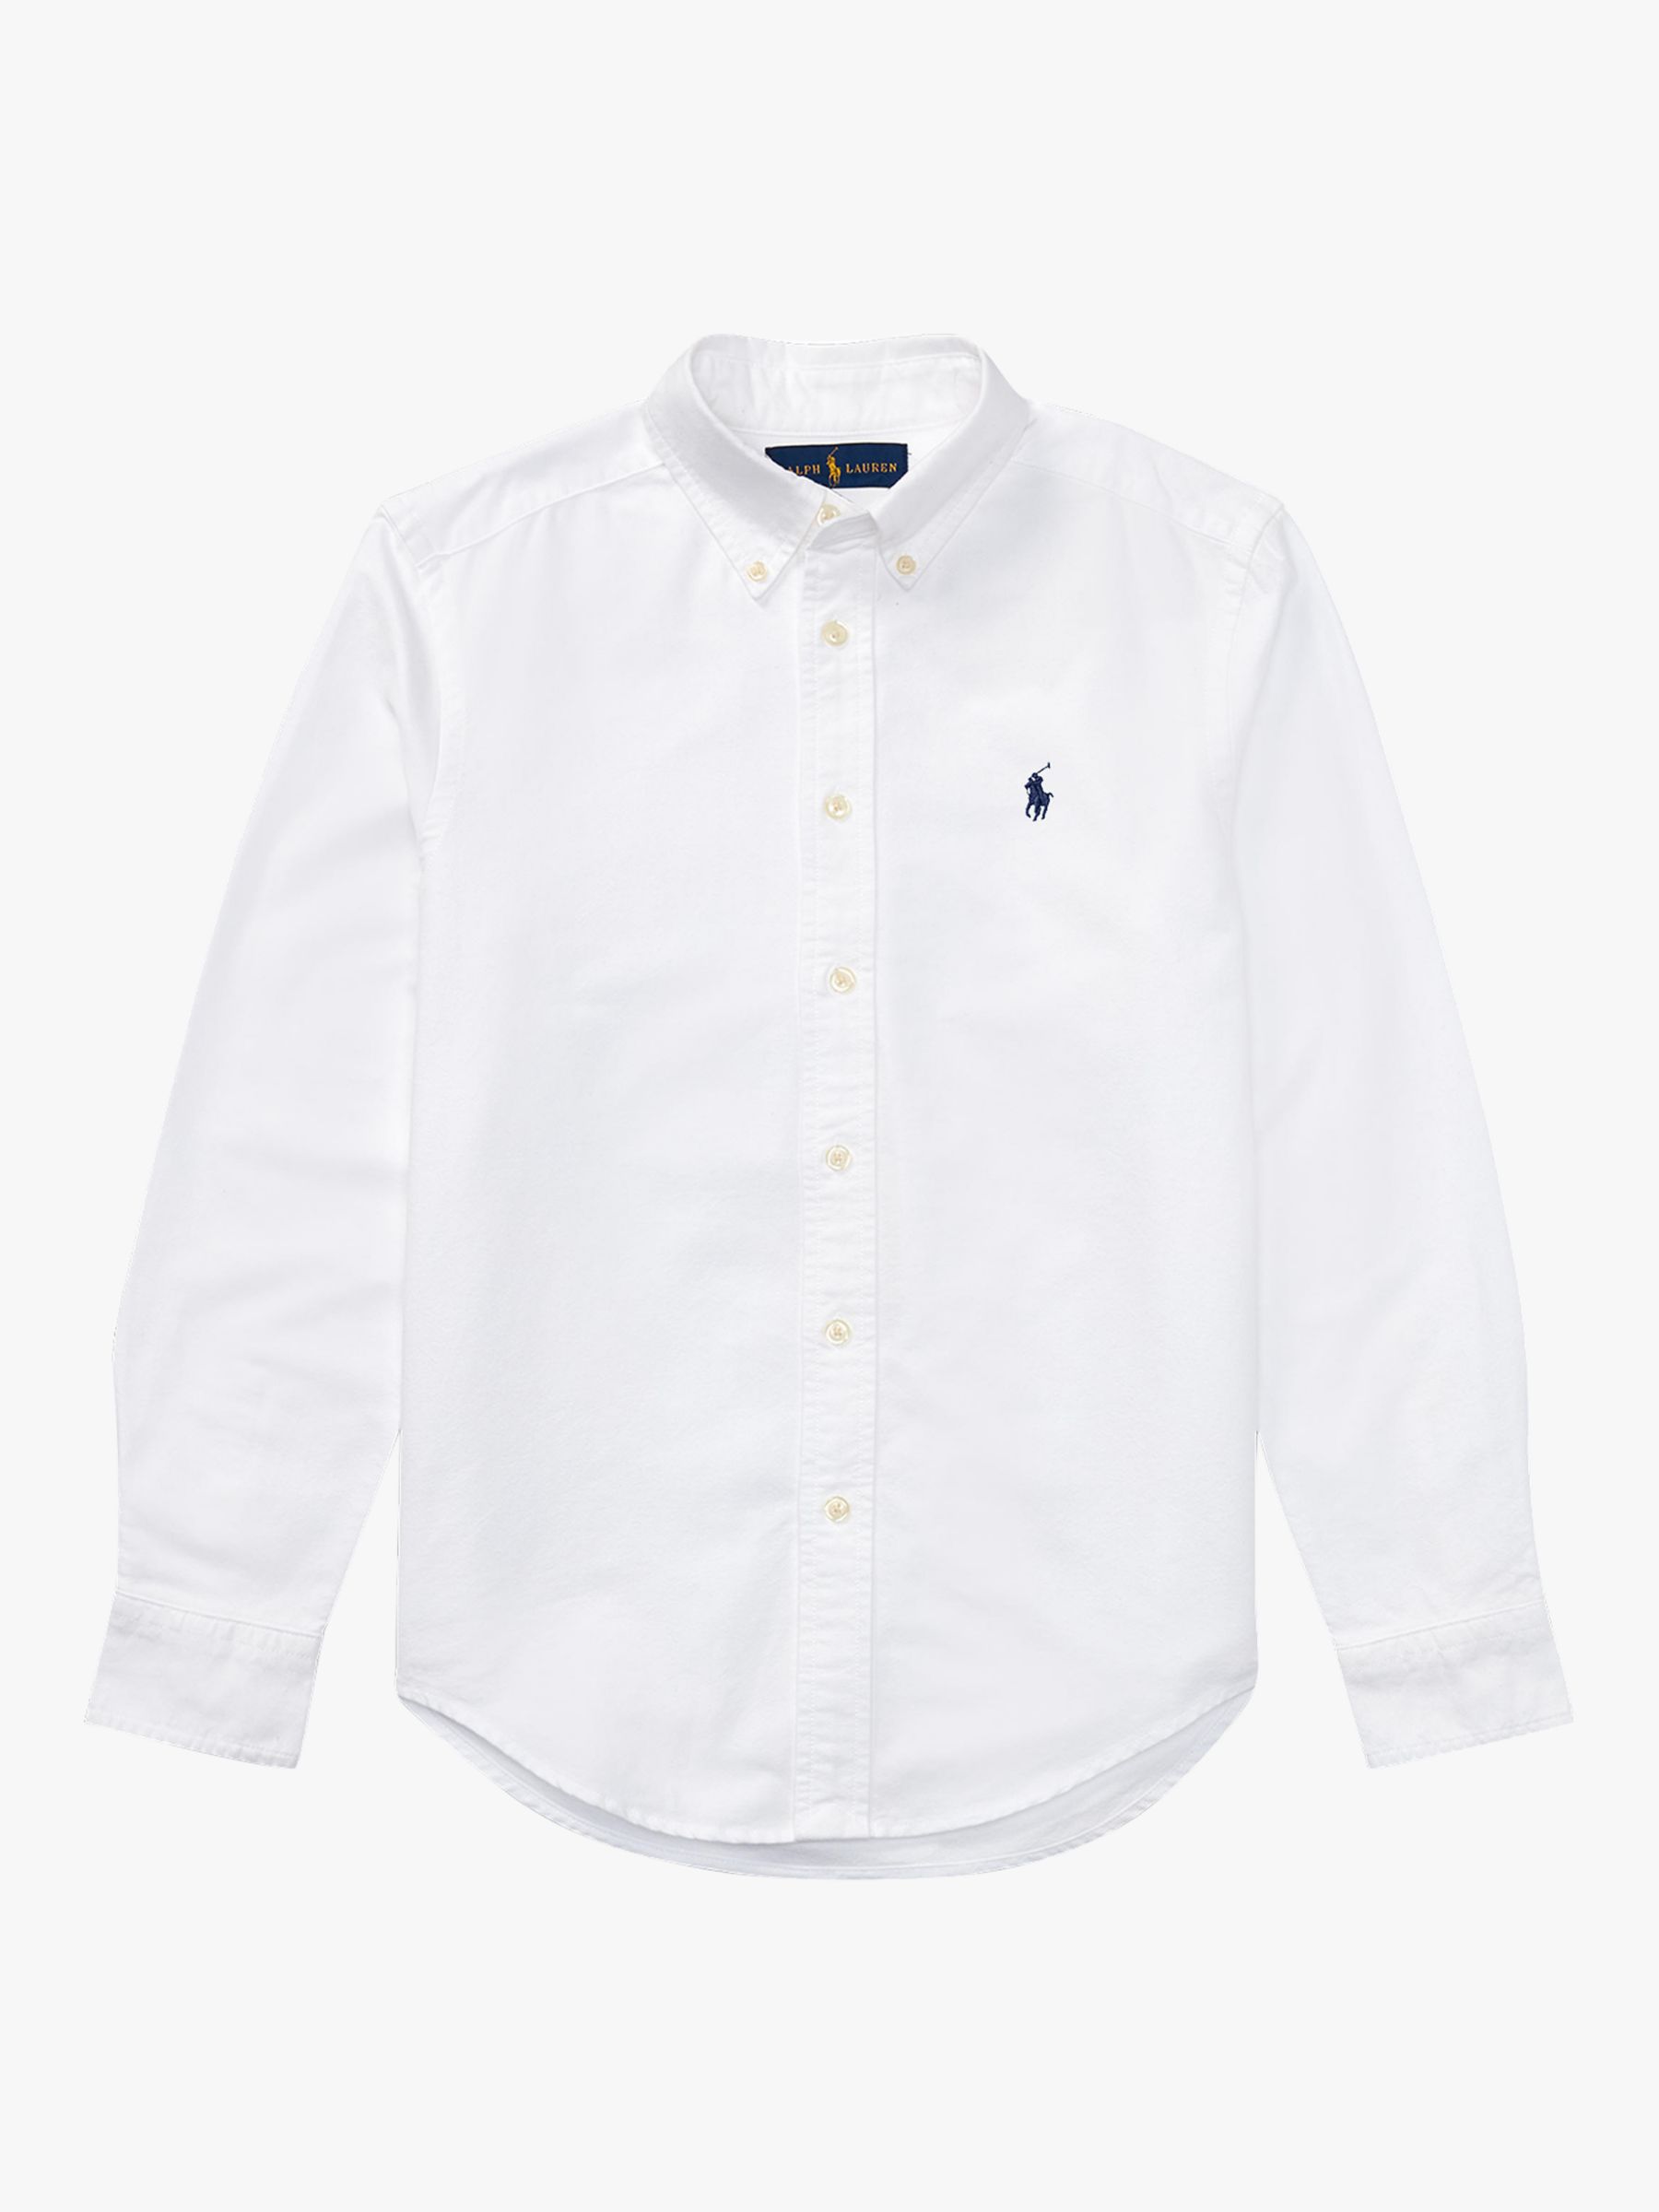 Polo Ralph Lauren Kids' Oxford Shirt, White at John Lewis & Partners